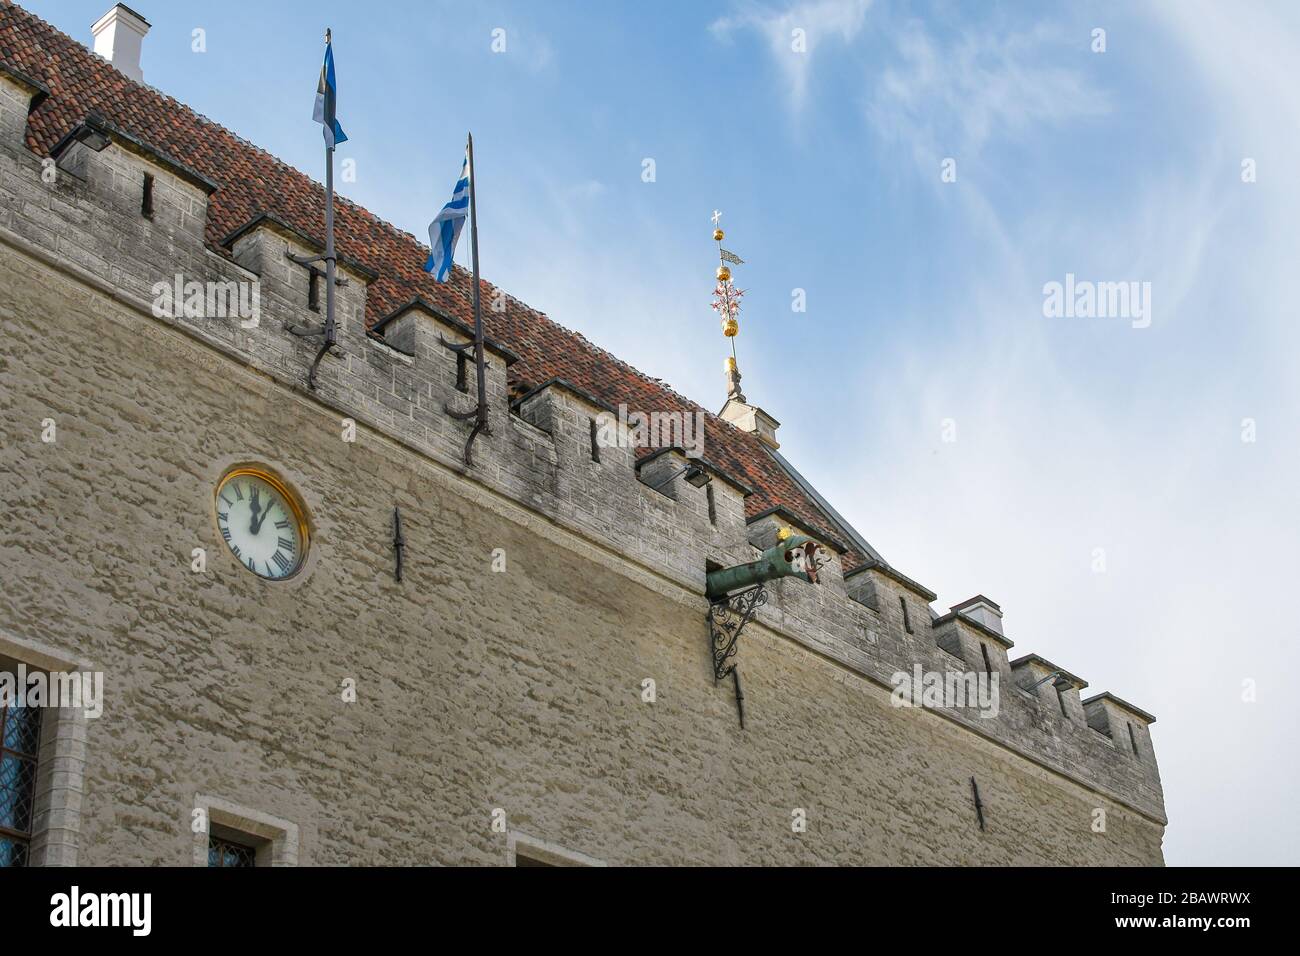 One of the dragon head gargoyles protrudes near the clock on the medieval Town Hall building in Tallinn Estonia. Stock Photo